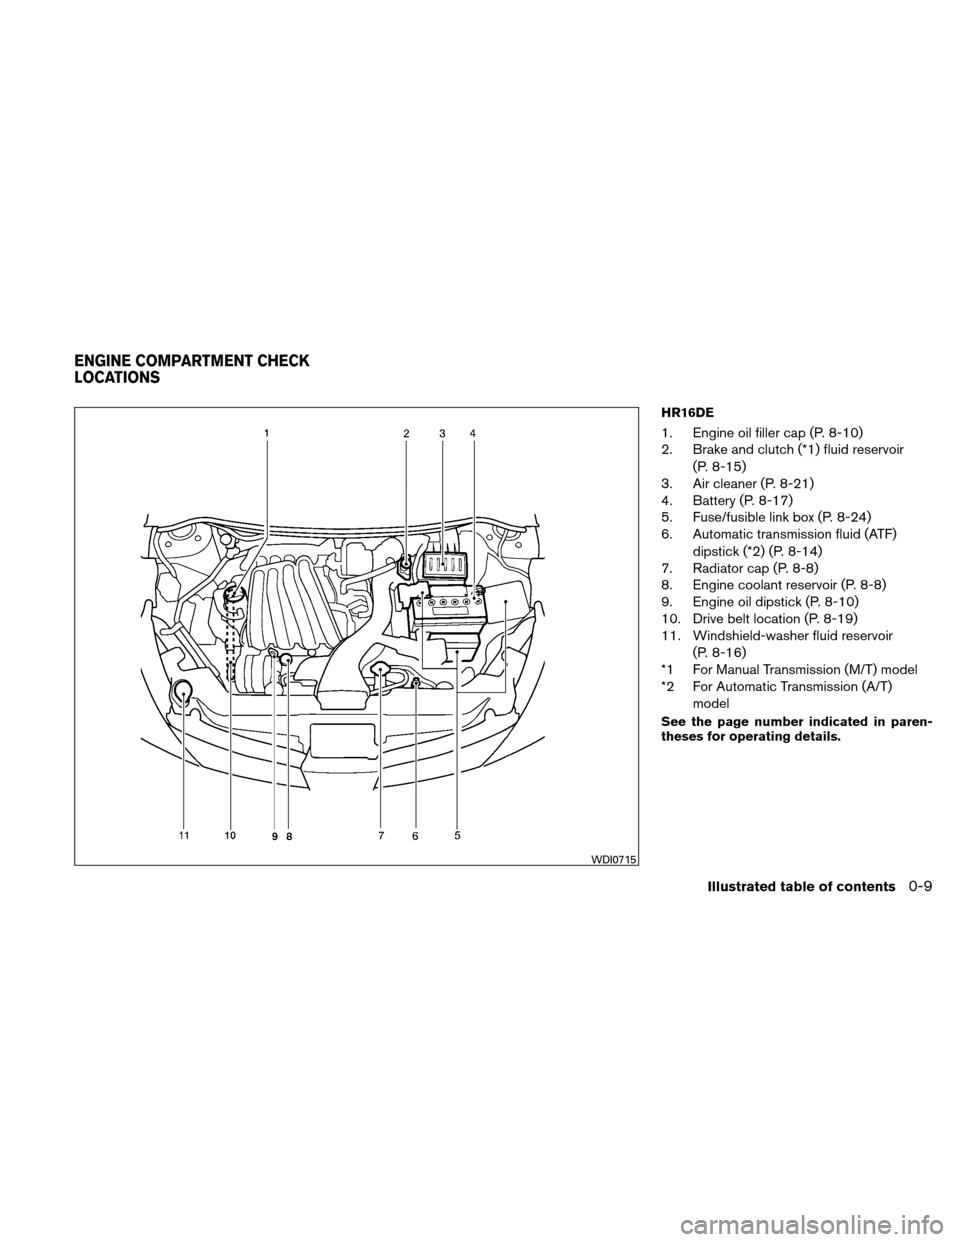 NISSAN VERSA HATCHBACK 2011 1.G Owners Manual HR16DE
1. Engine oil filler cap (P. 8-10)
2. Brake and clutch (*1) fluid reservoir(P. 8-15)
3. Air cleaner (P. 8-21)
4. Battery (P. 8-17)
5. Fuse/fusible link box (P. 8-24)
6. Automatic transmission f